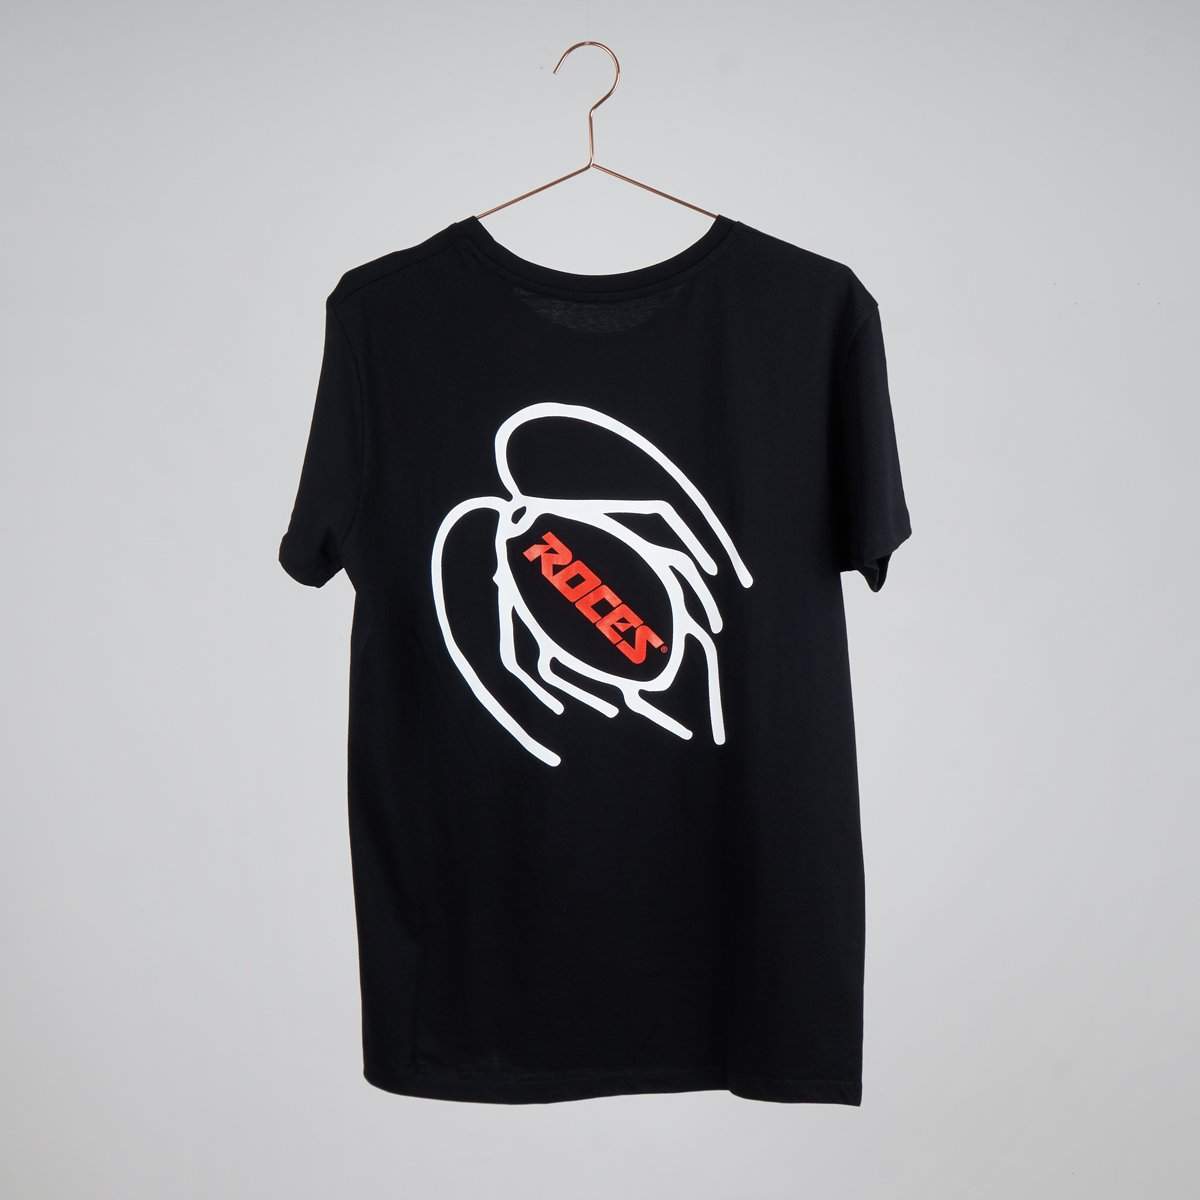 Roces 'Roach' T-shirt - Black-Roces-Aggressive Skate,black,Clothing,T-shirts